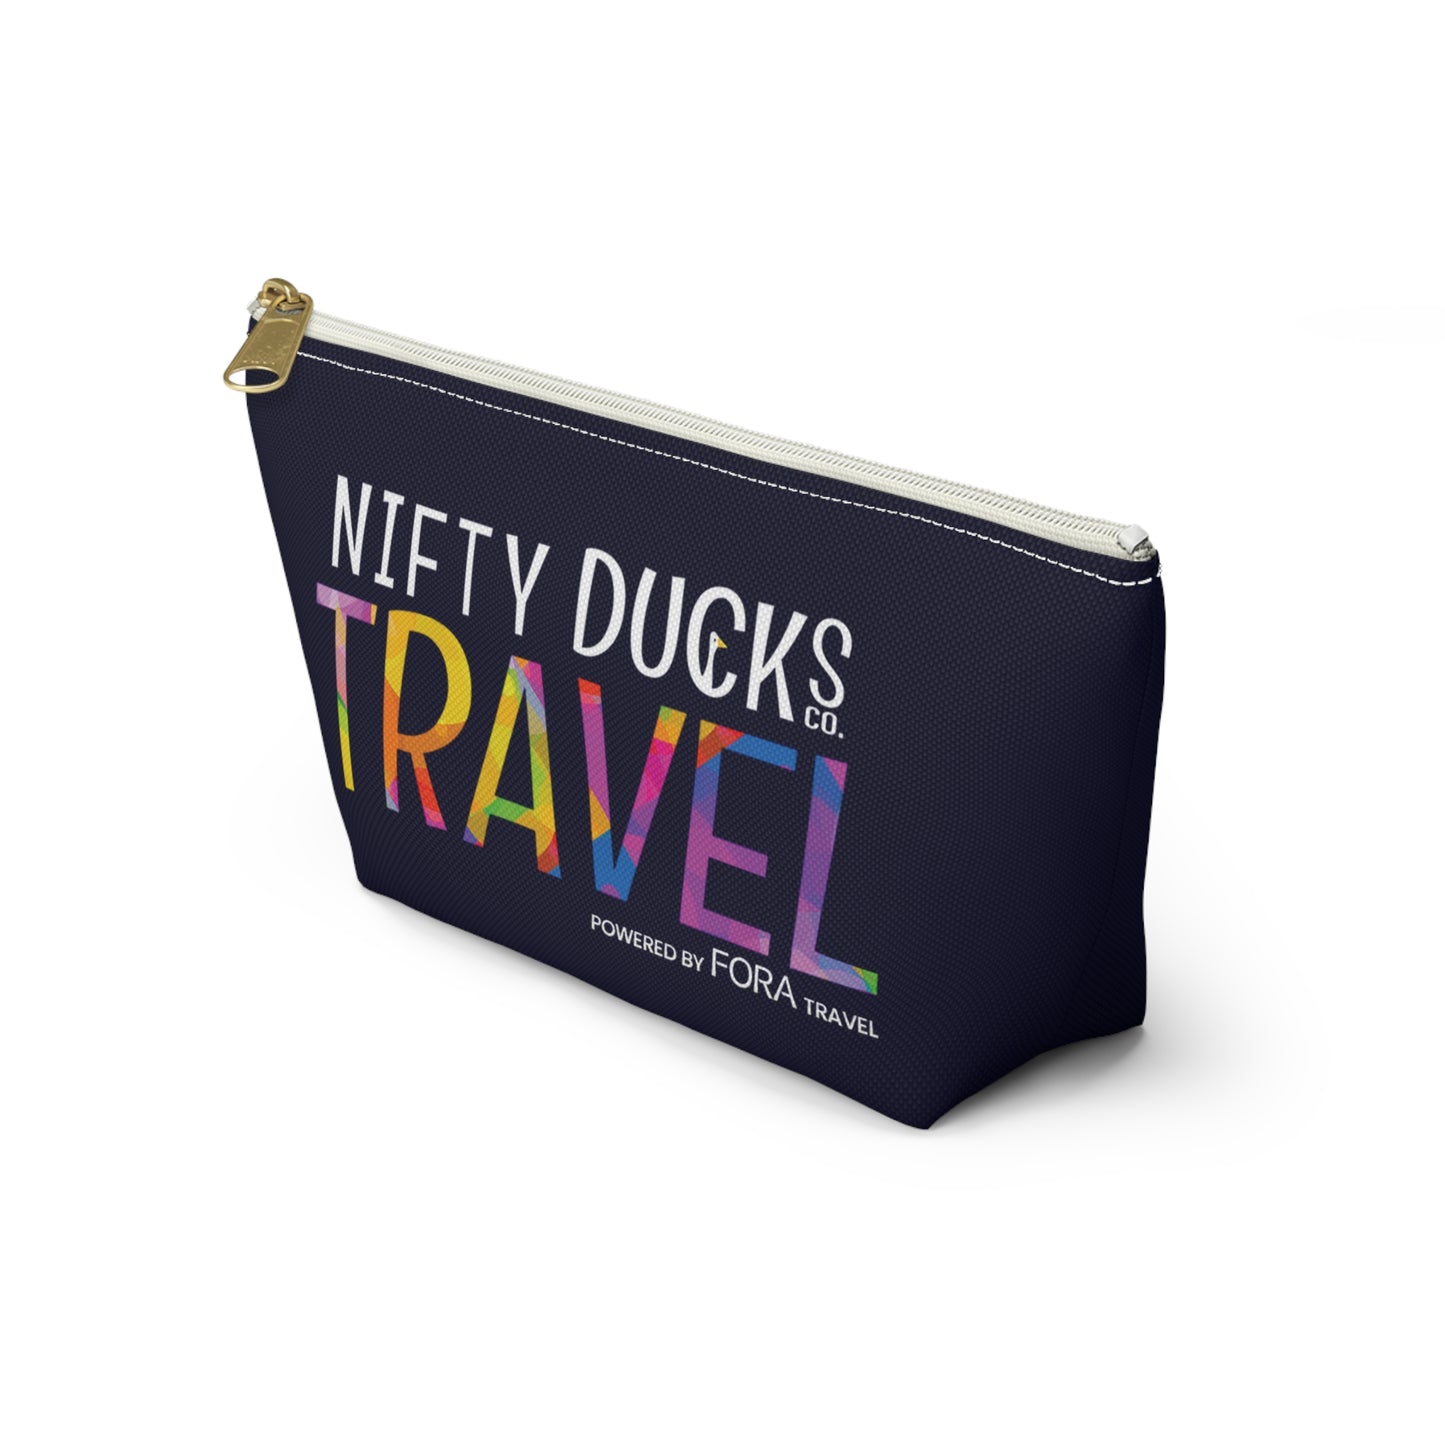 Nifty Ducks Co Travel Logo - Accessory Pouch w T-bottom